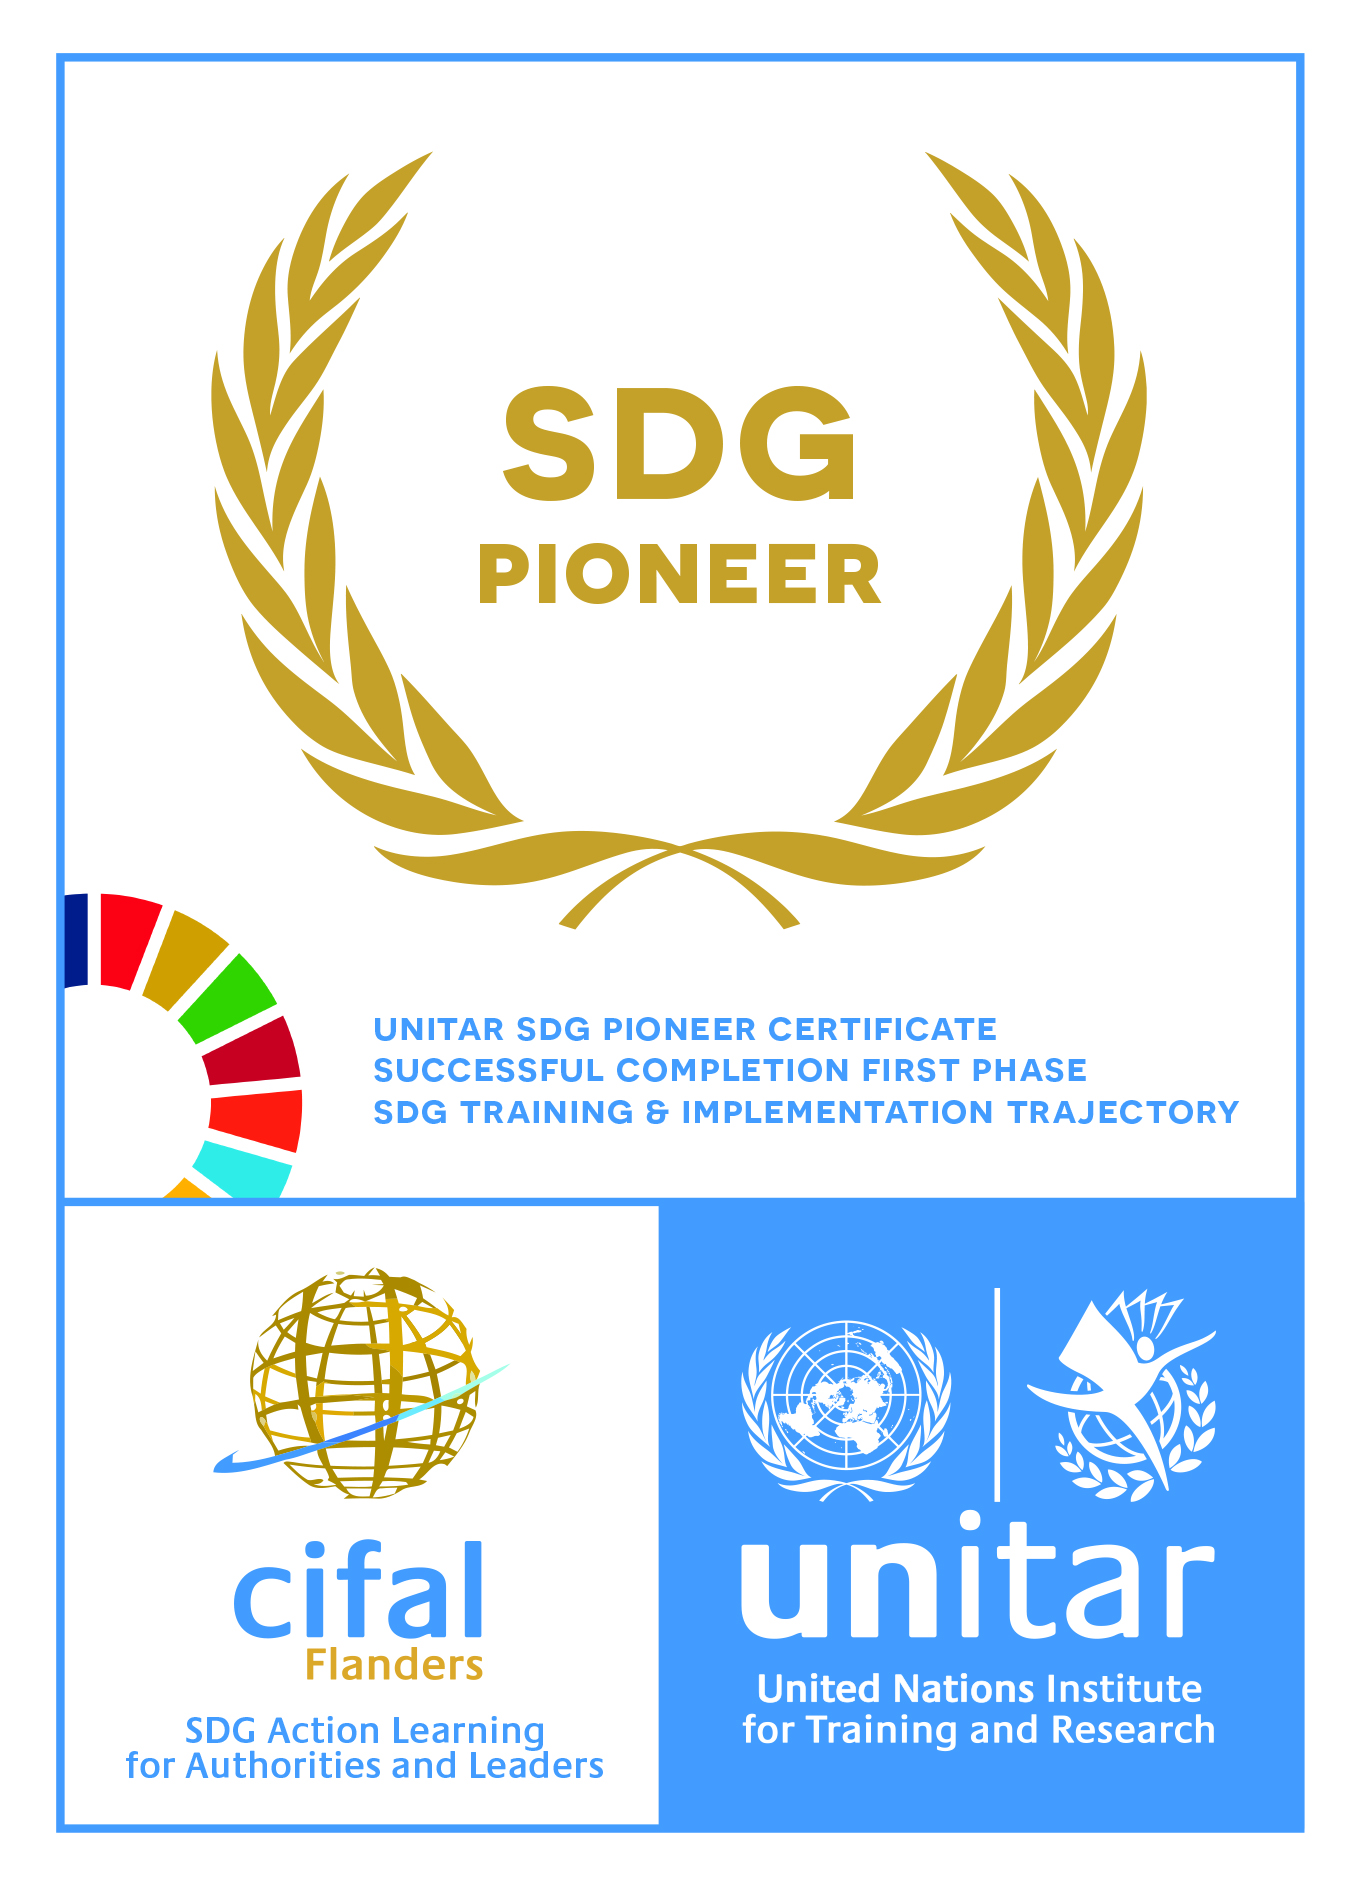 UNITAR SDG Pioneer certificate